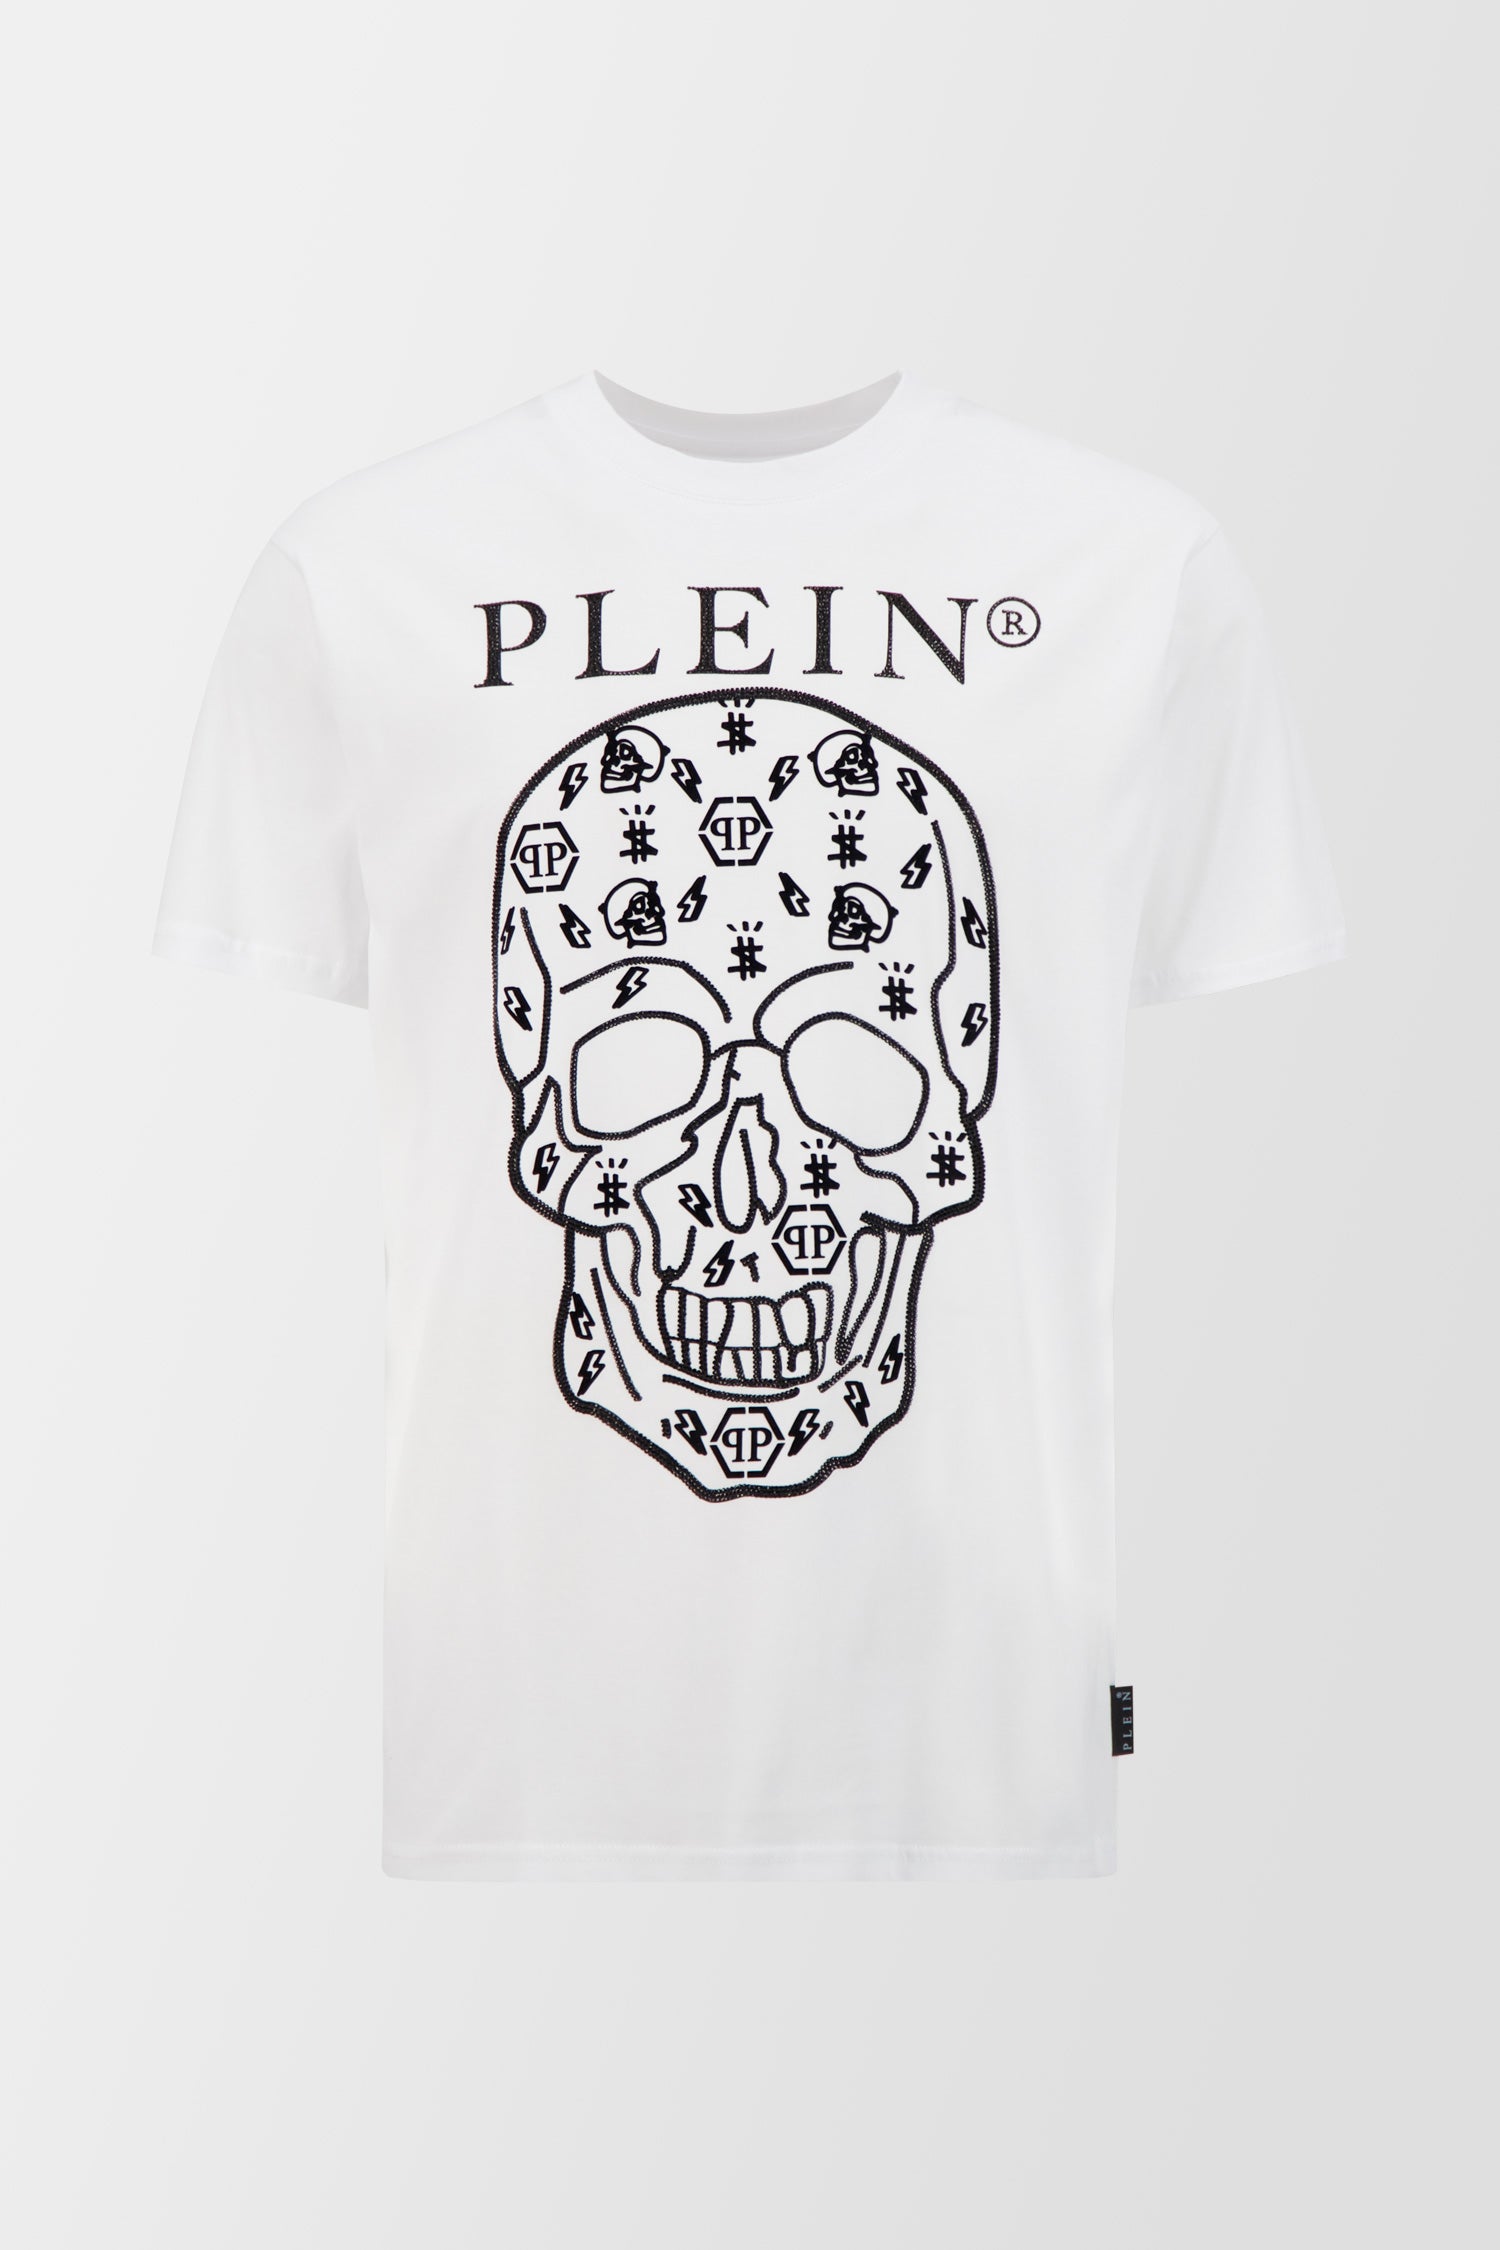 Philipp Plein White Round Neck T-Shirt